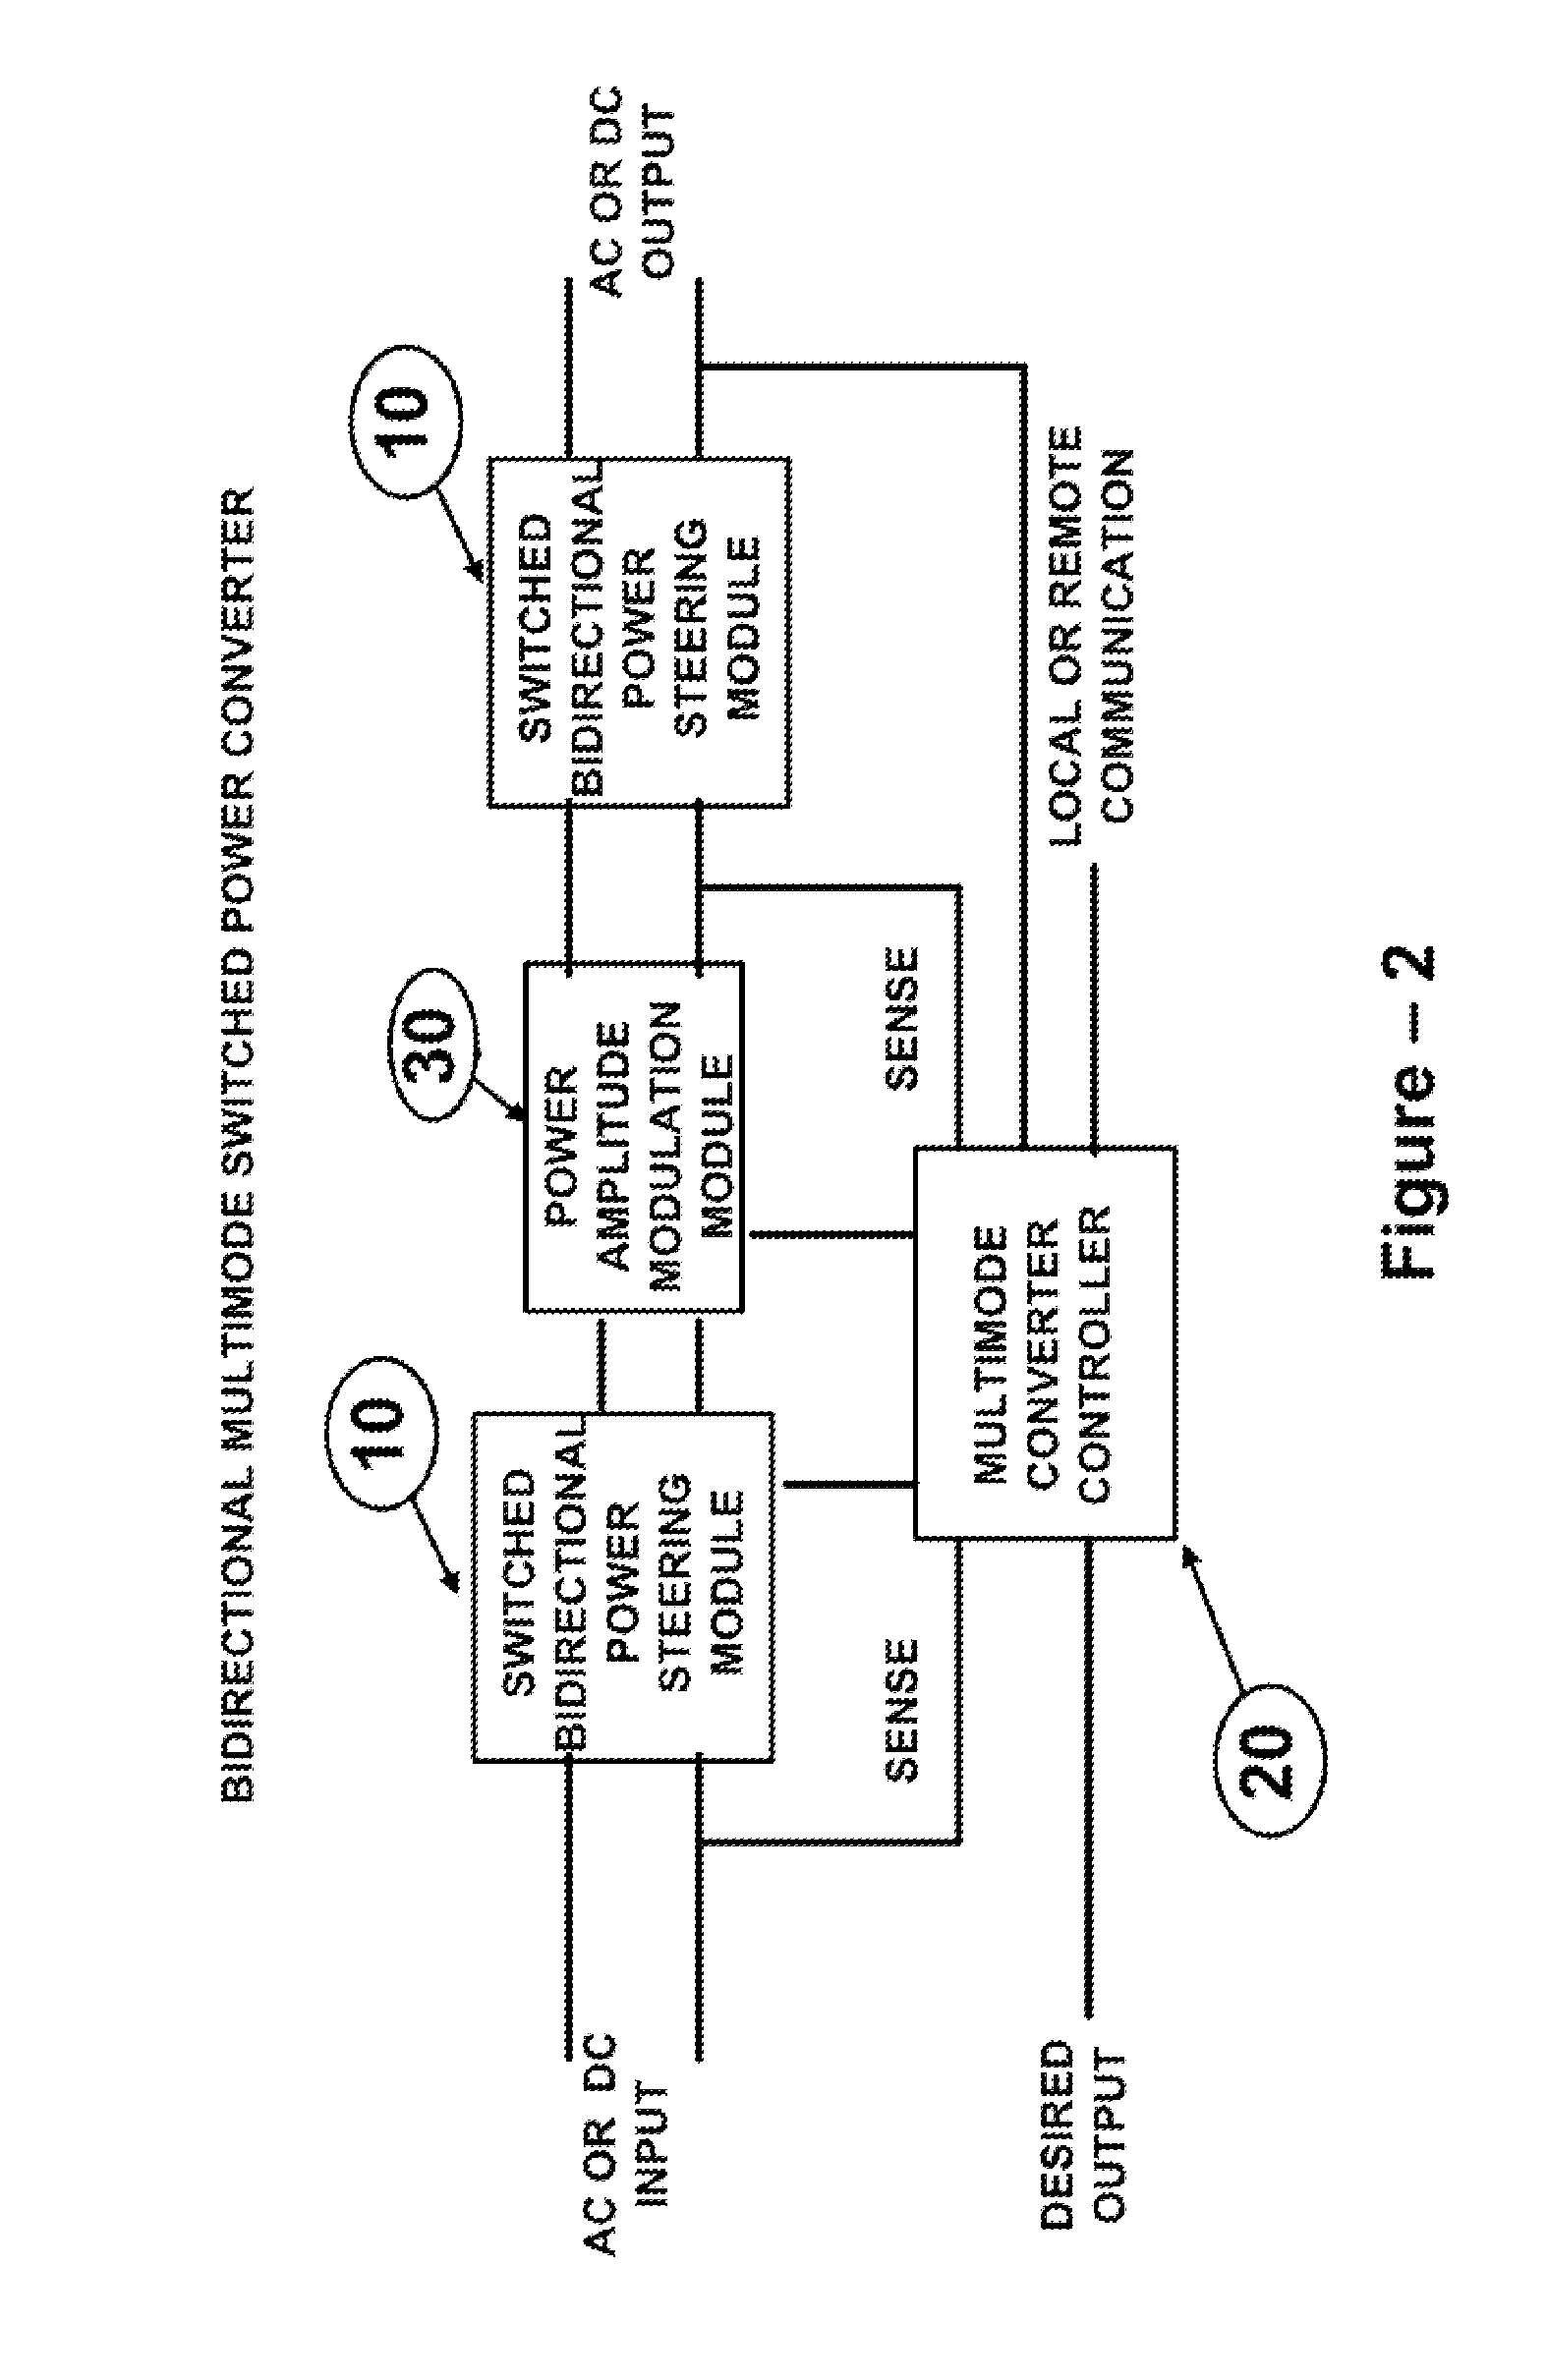 Bidirectional multimode power converter